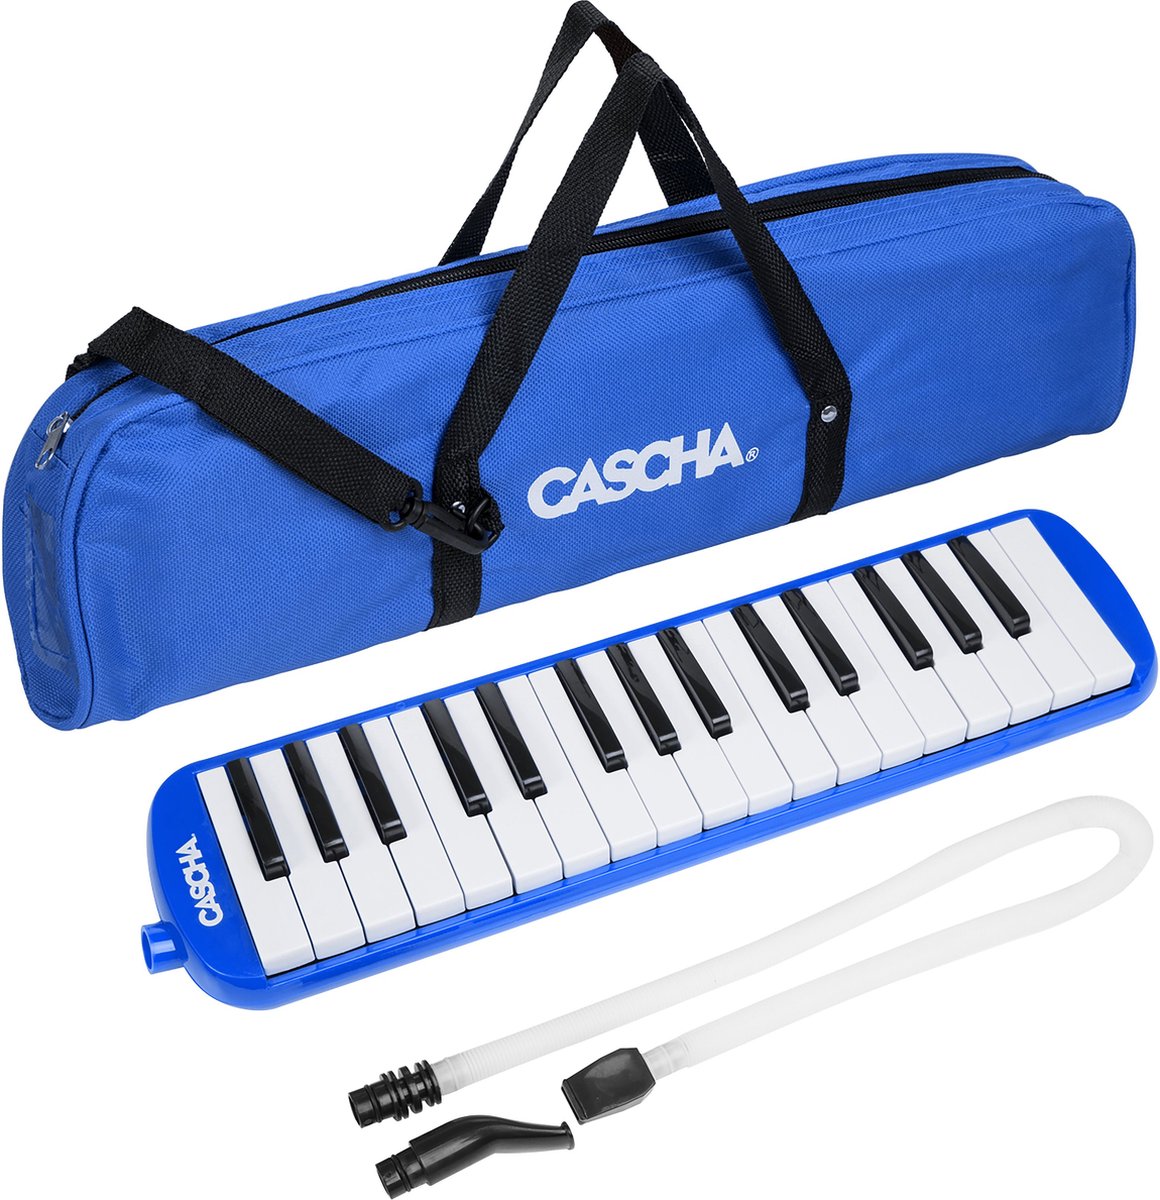 Cascha HH 2060 melodica set blauw